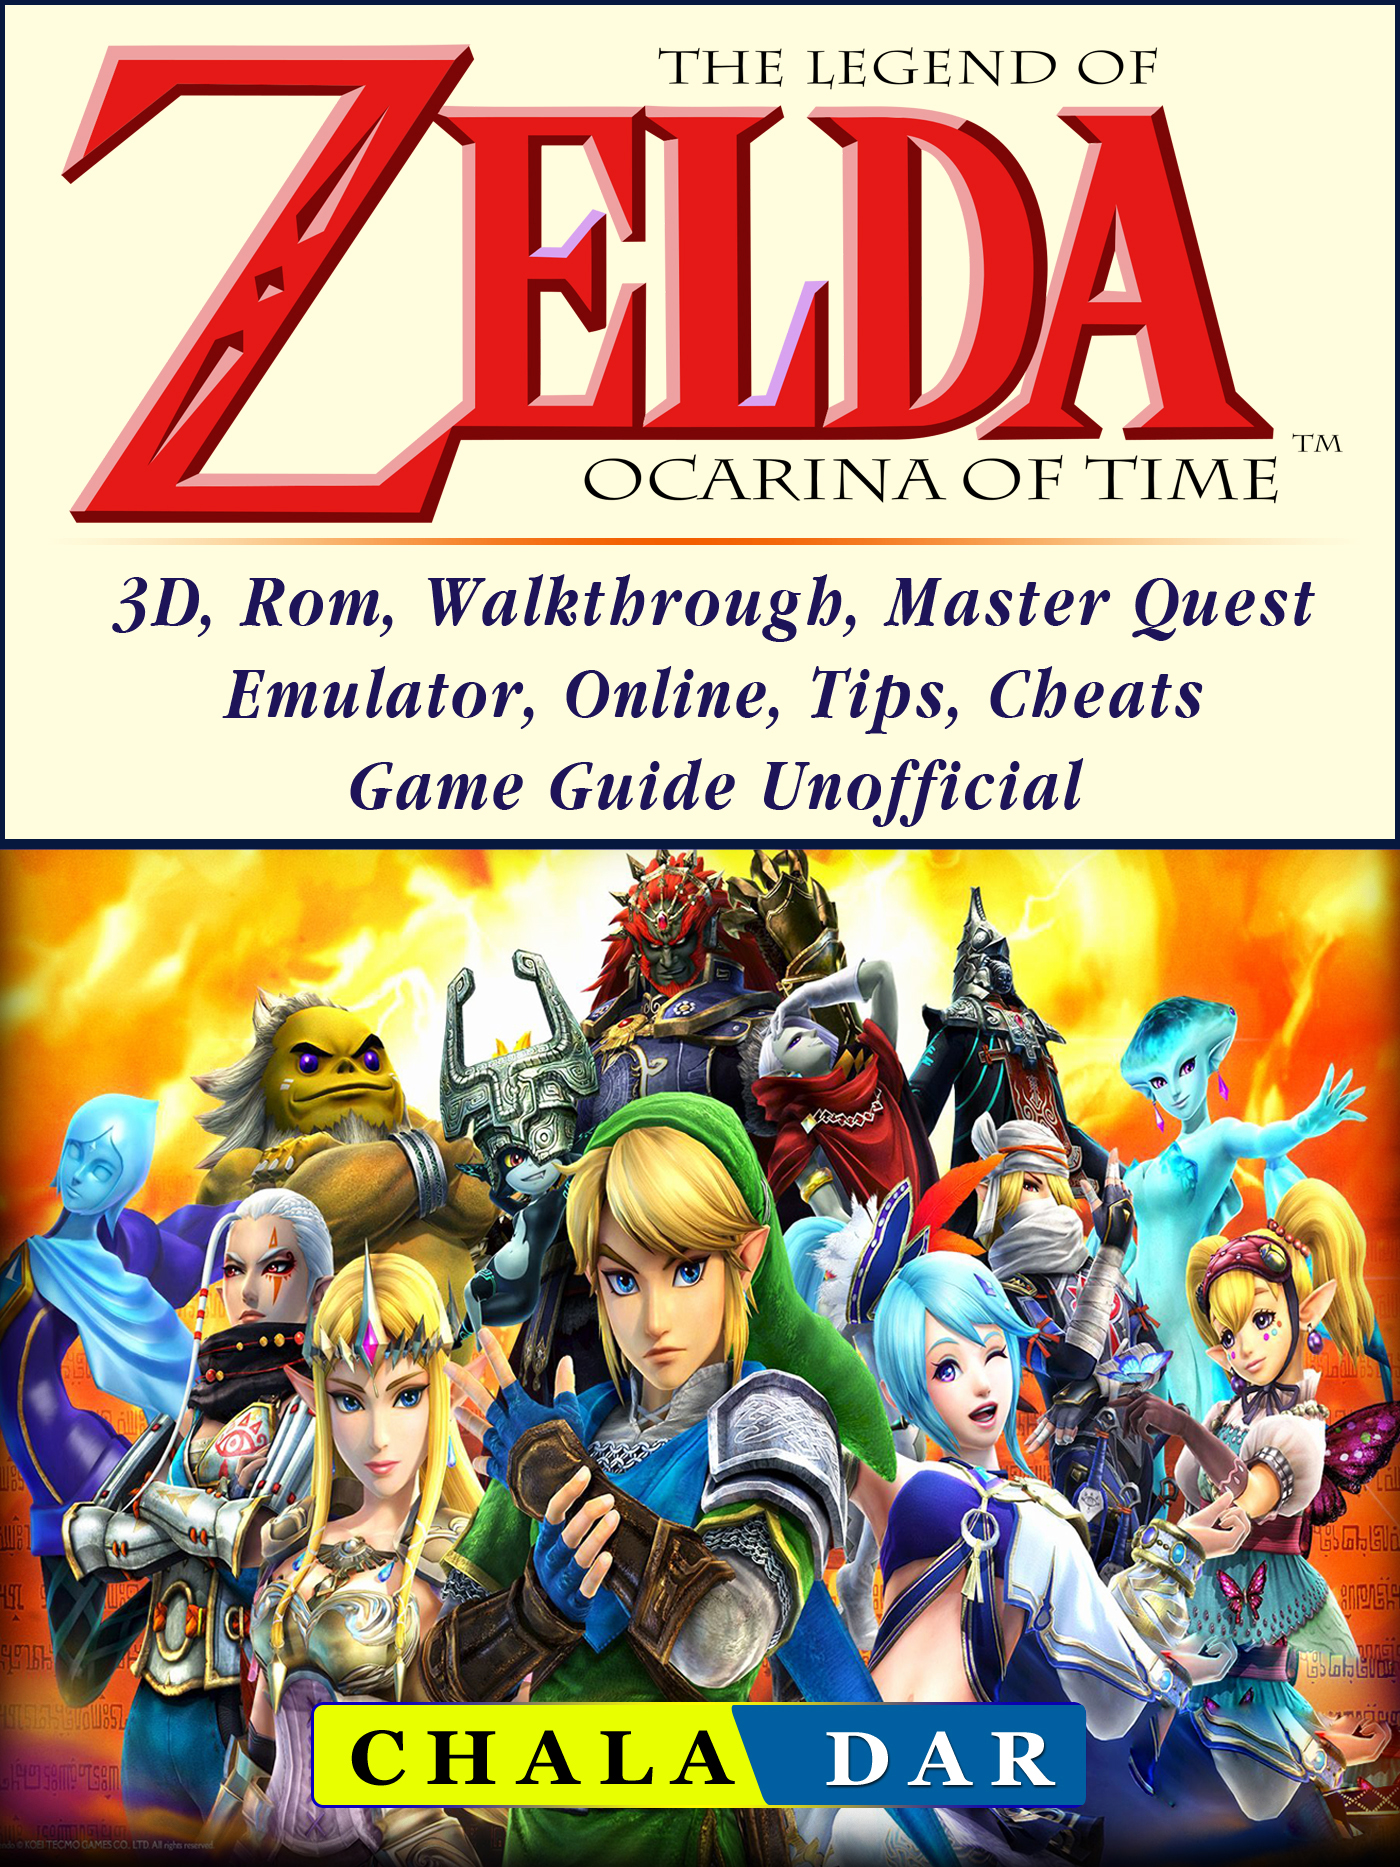 The Legend of Zelda Ocarina of Time, 3D, Rom, Walkthrough, Master Quest,  Emulator, Online, Tips, Cheats, Game Guide Unofficial eBook by Chala Dar 